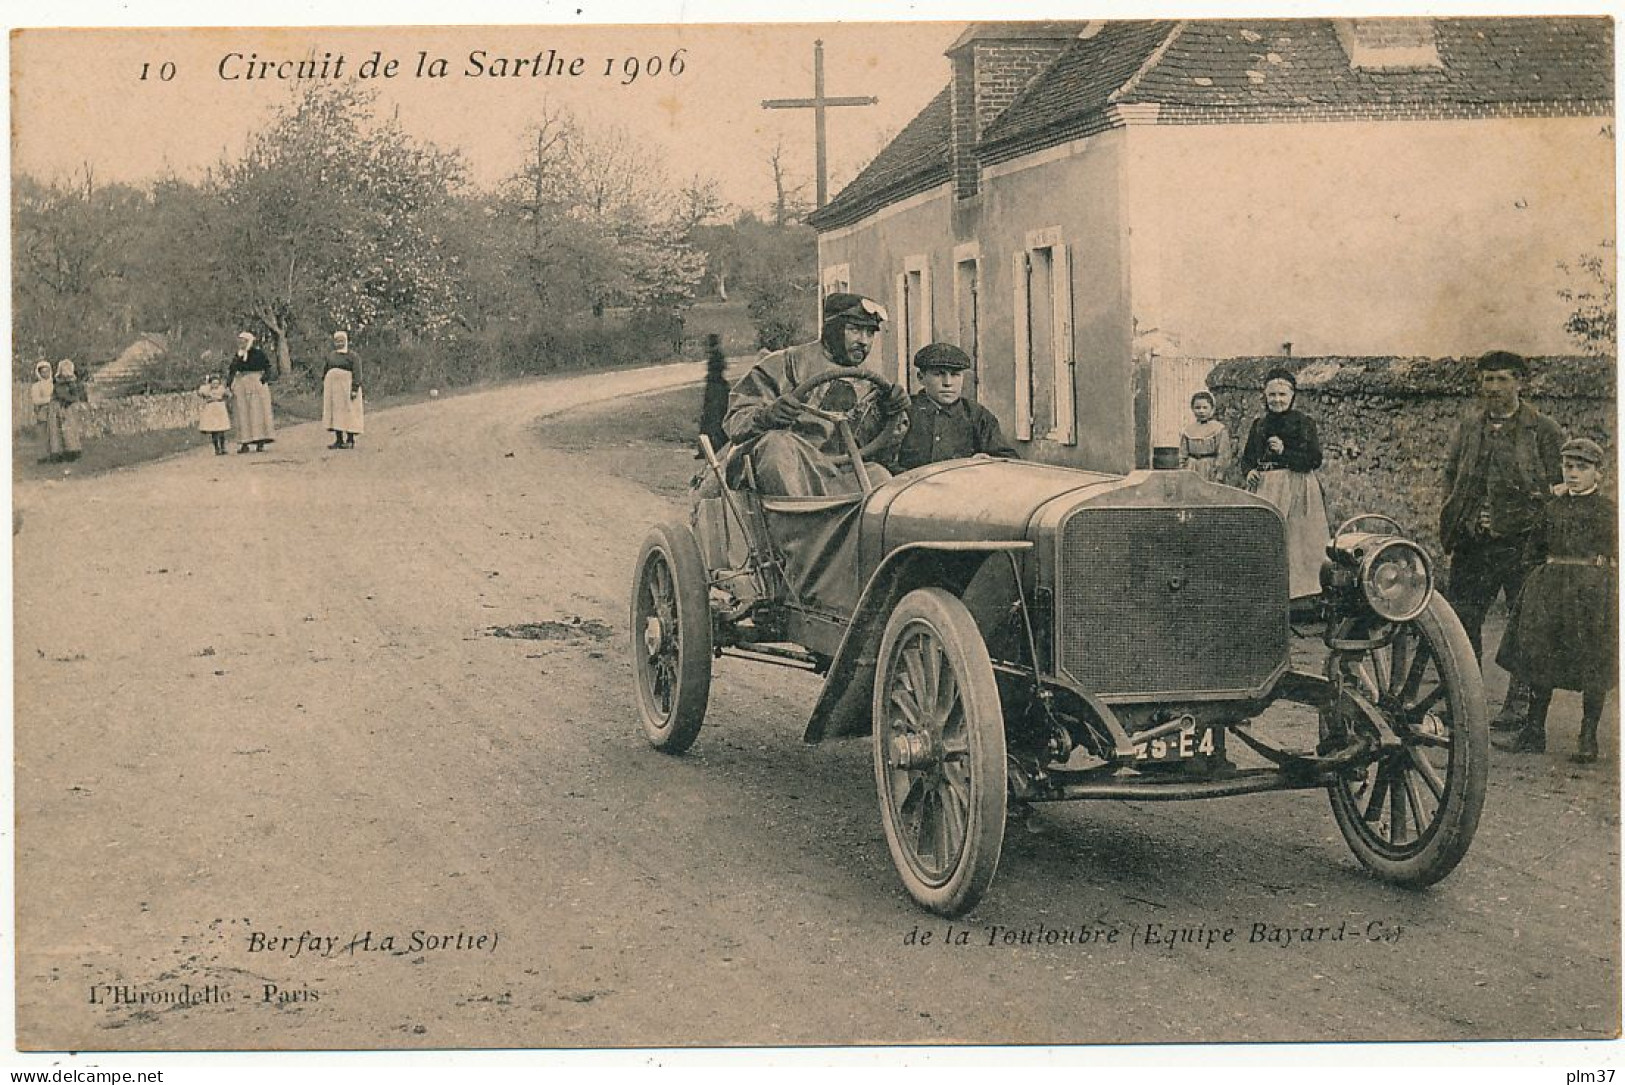 Circuit De La Sarthe 1906 - BERFAY, De La Touloubre, Equipe Bayard - Le Mans